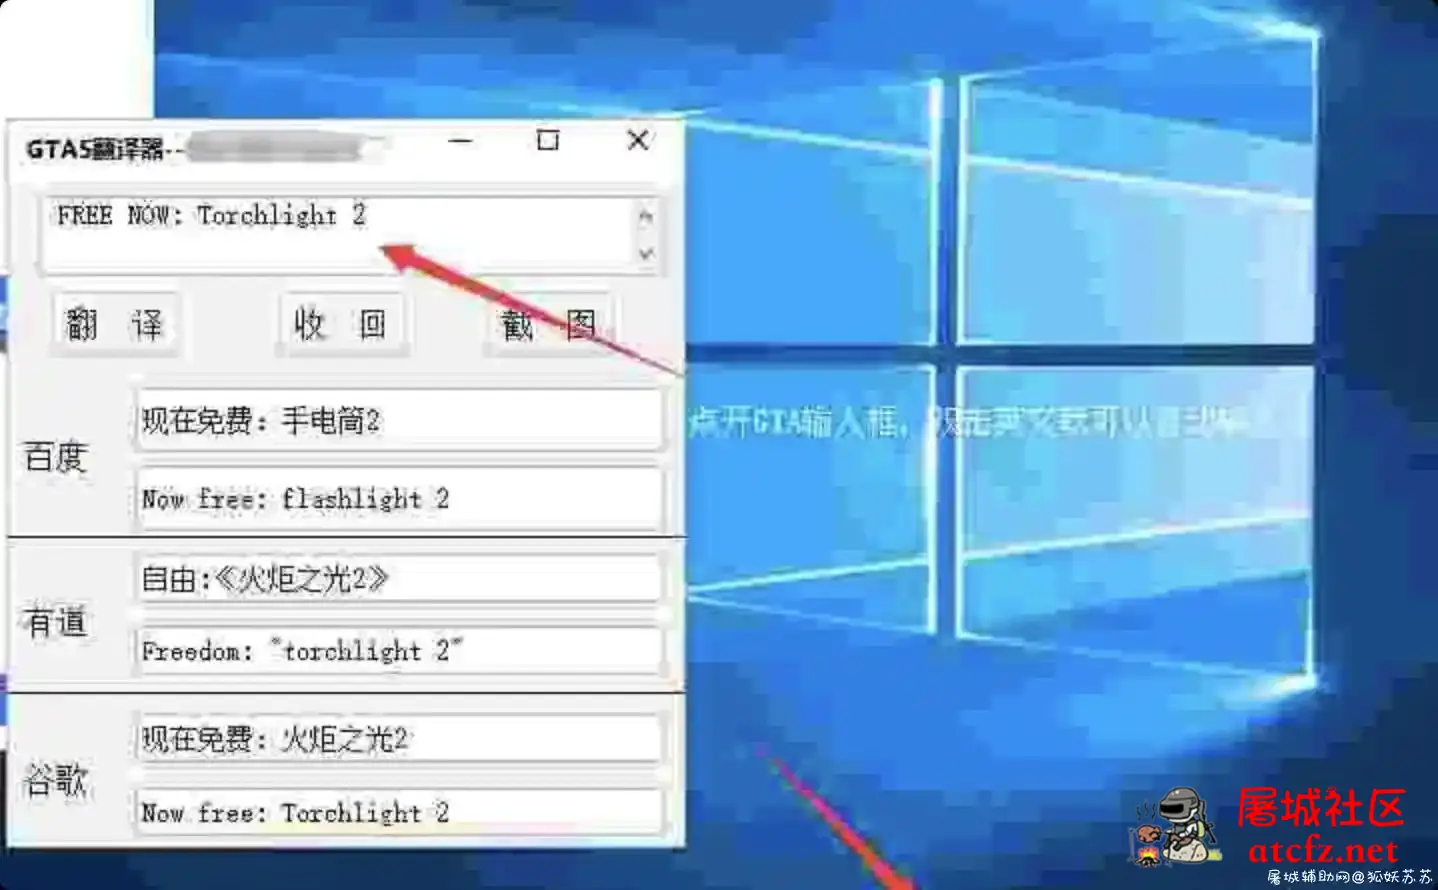 GTA5自动翻译器 自动输入内容 v0.3 新增搜狗翻译 屠城辅助网www.tcfz1.com2393